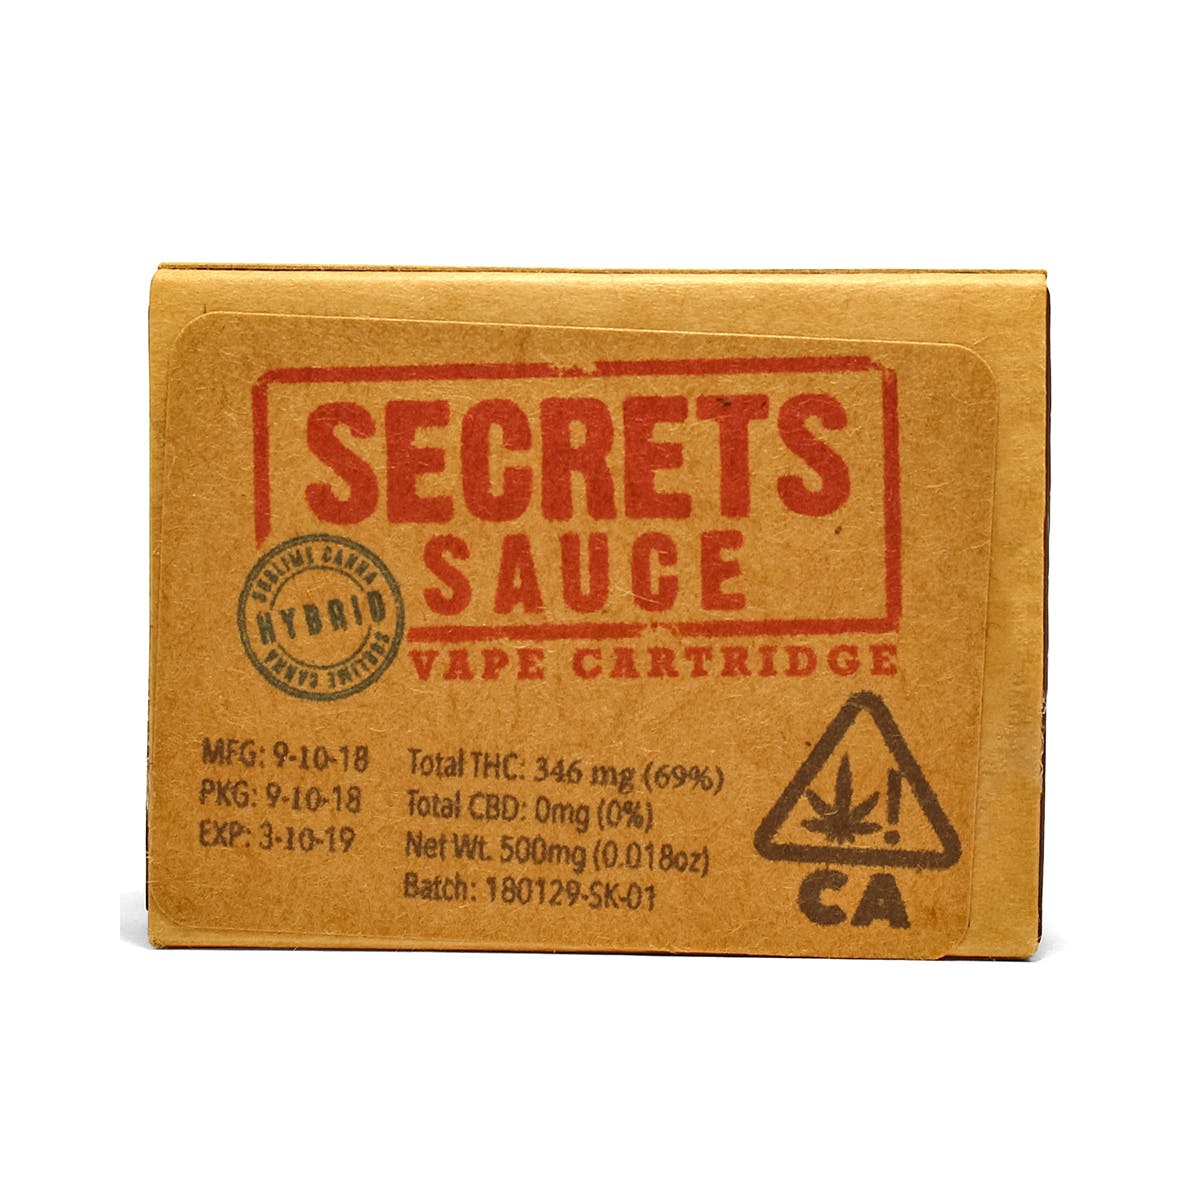 Secrets Sauce Cartridges - Hybrid